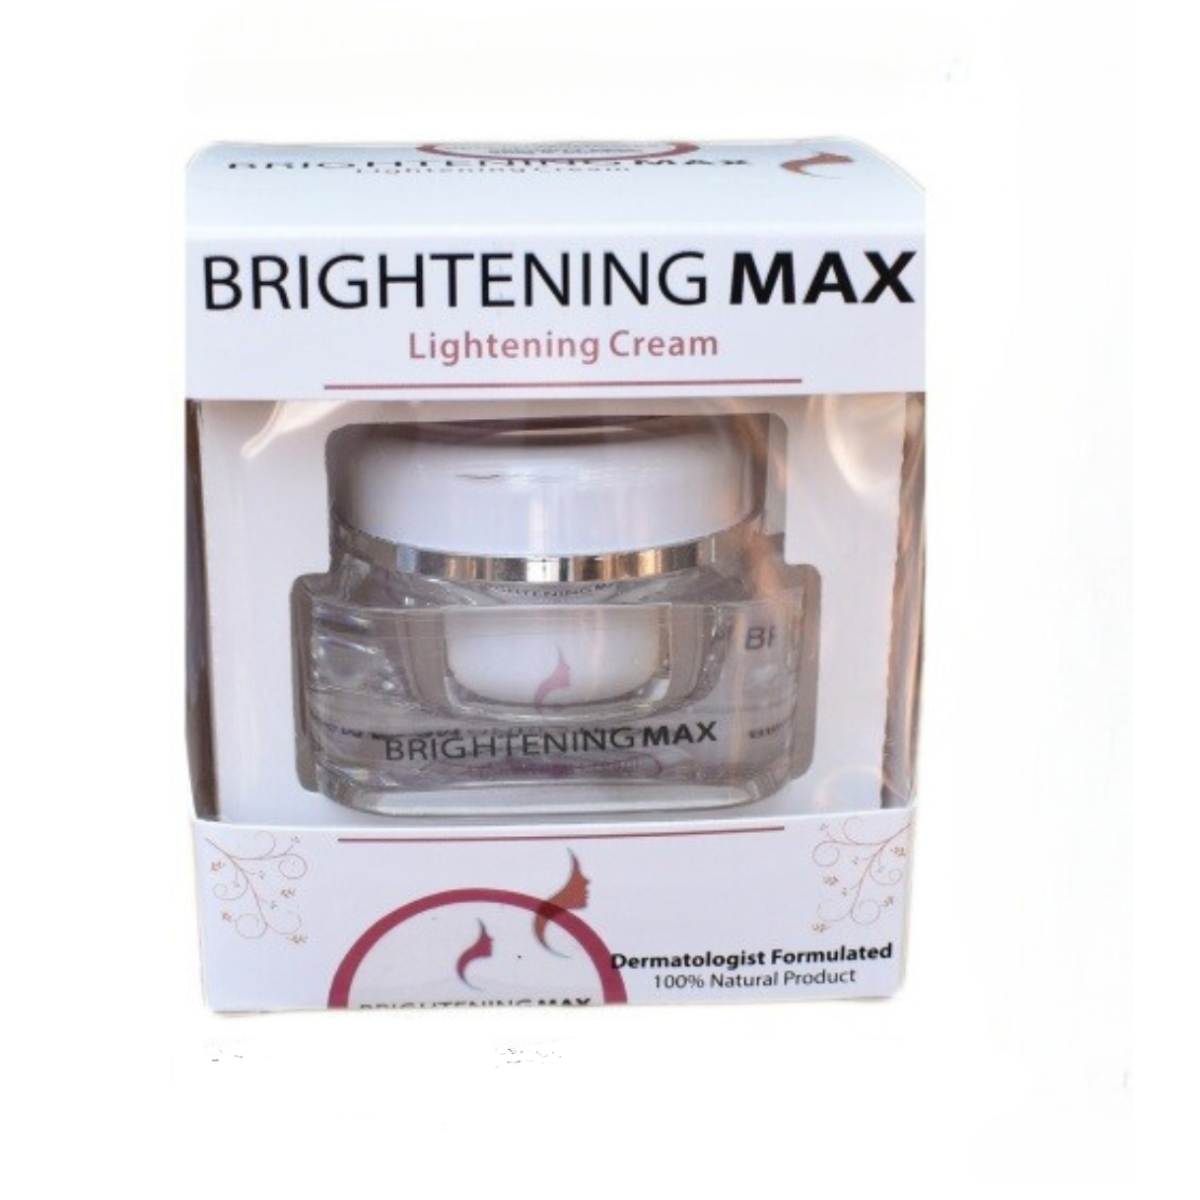 Brightening Max Skin Lightening Cream